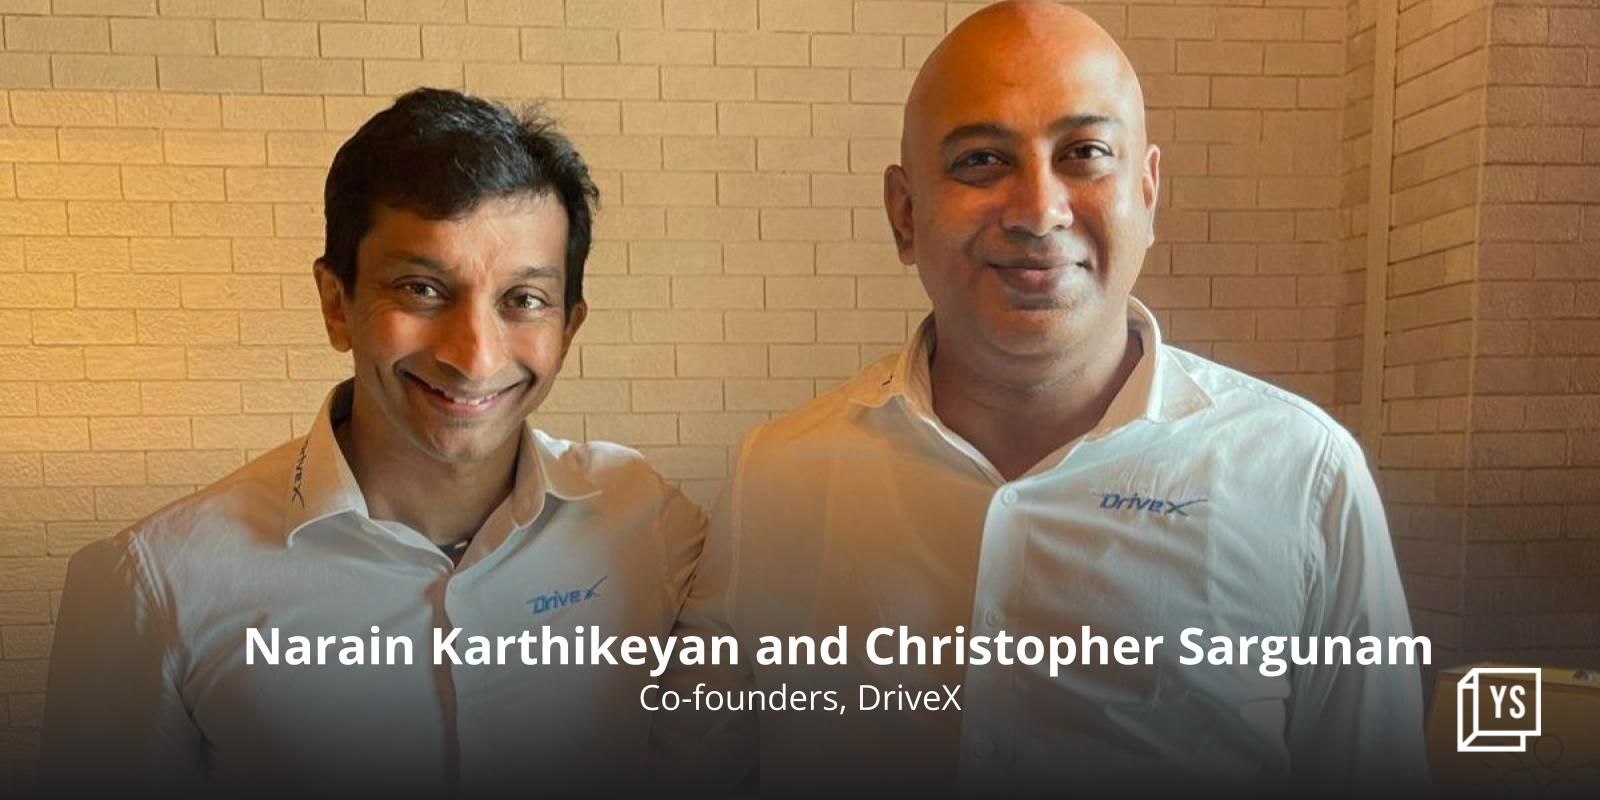 Formula 1 racer Narain Karthikeyan is driving success with his used two-wheeler startup 